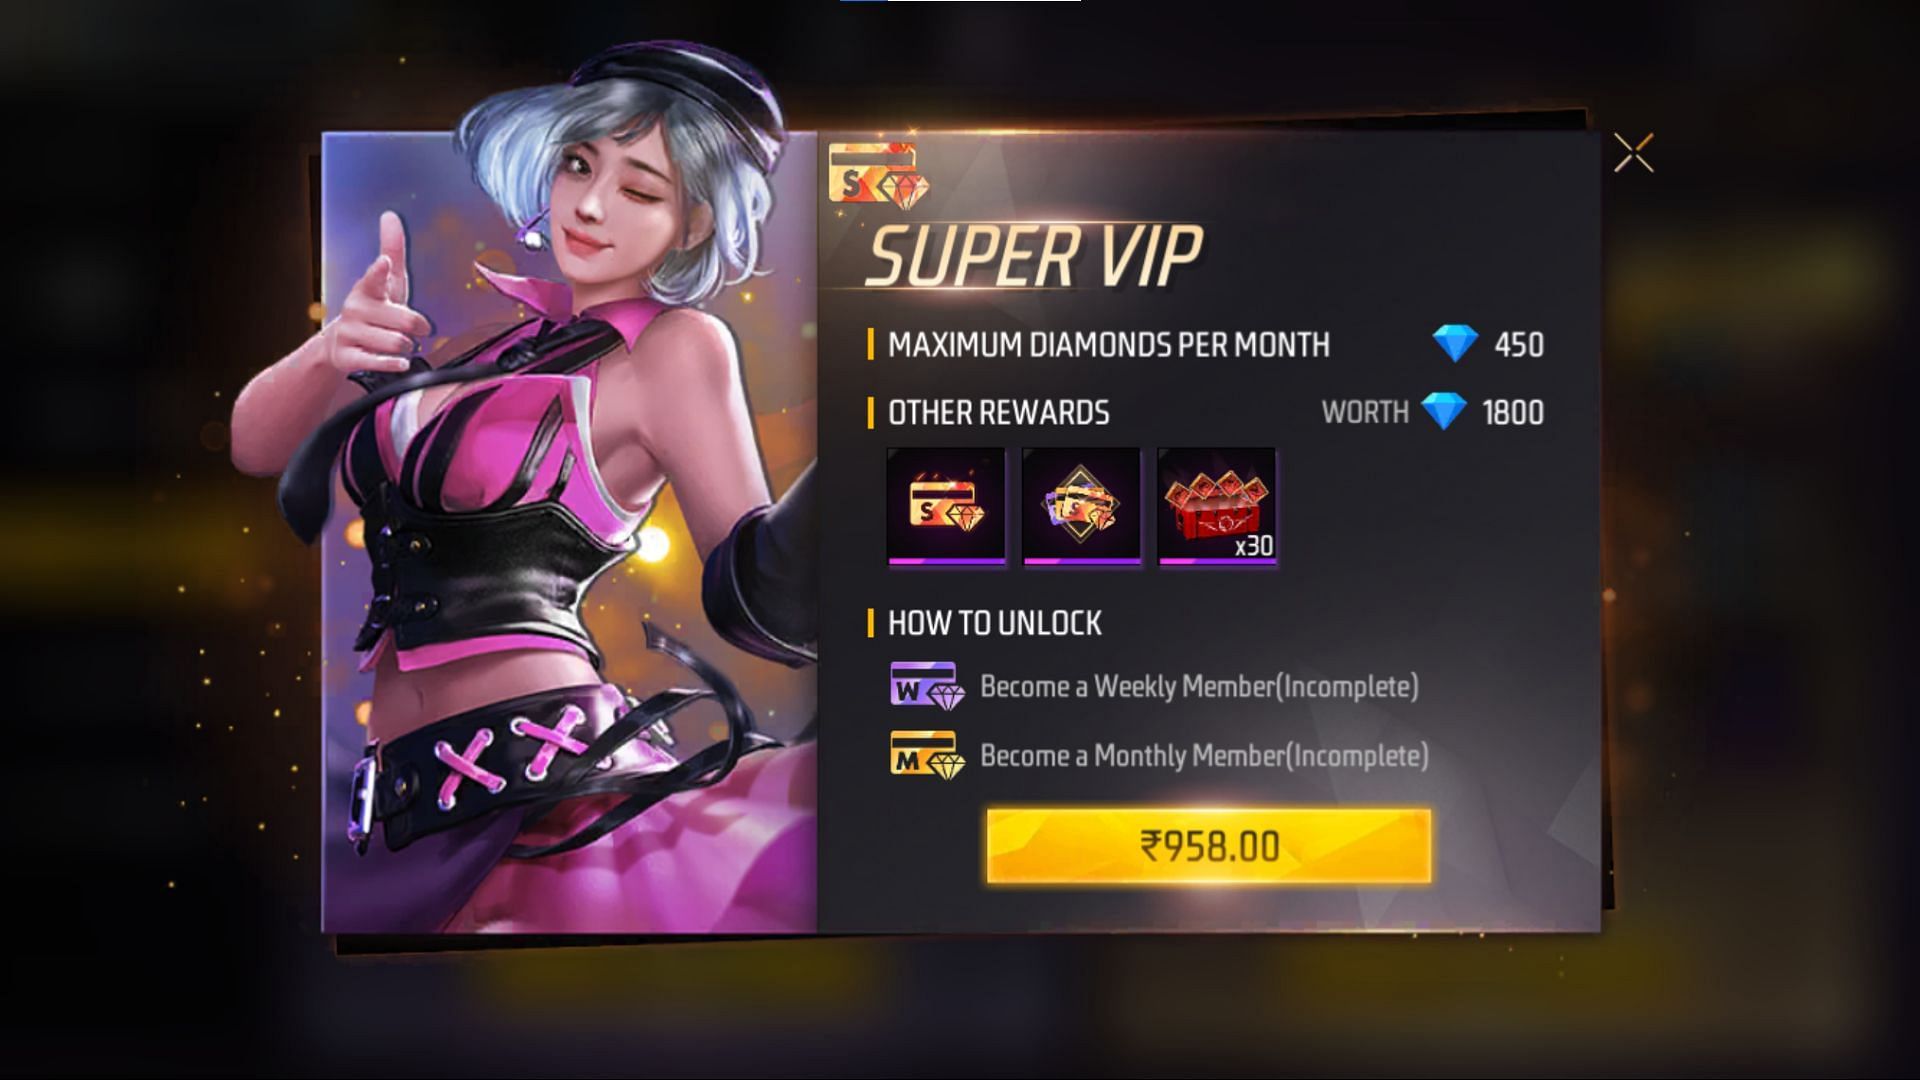 Purchase both to get Super VIP benefits (Image via Garena)